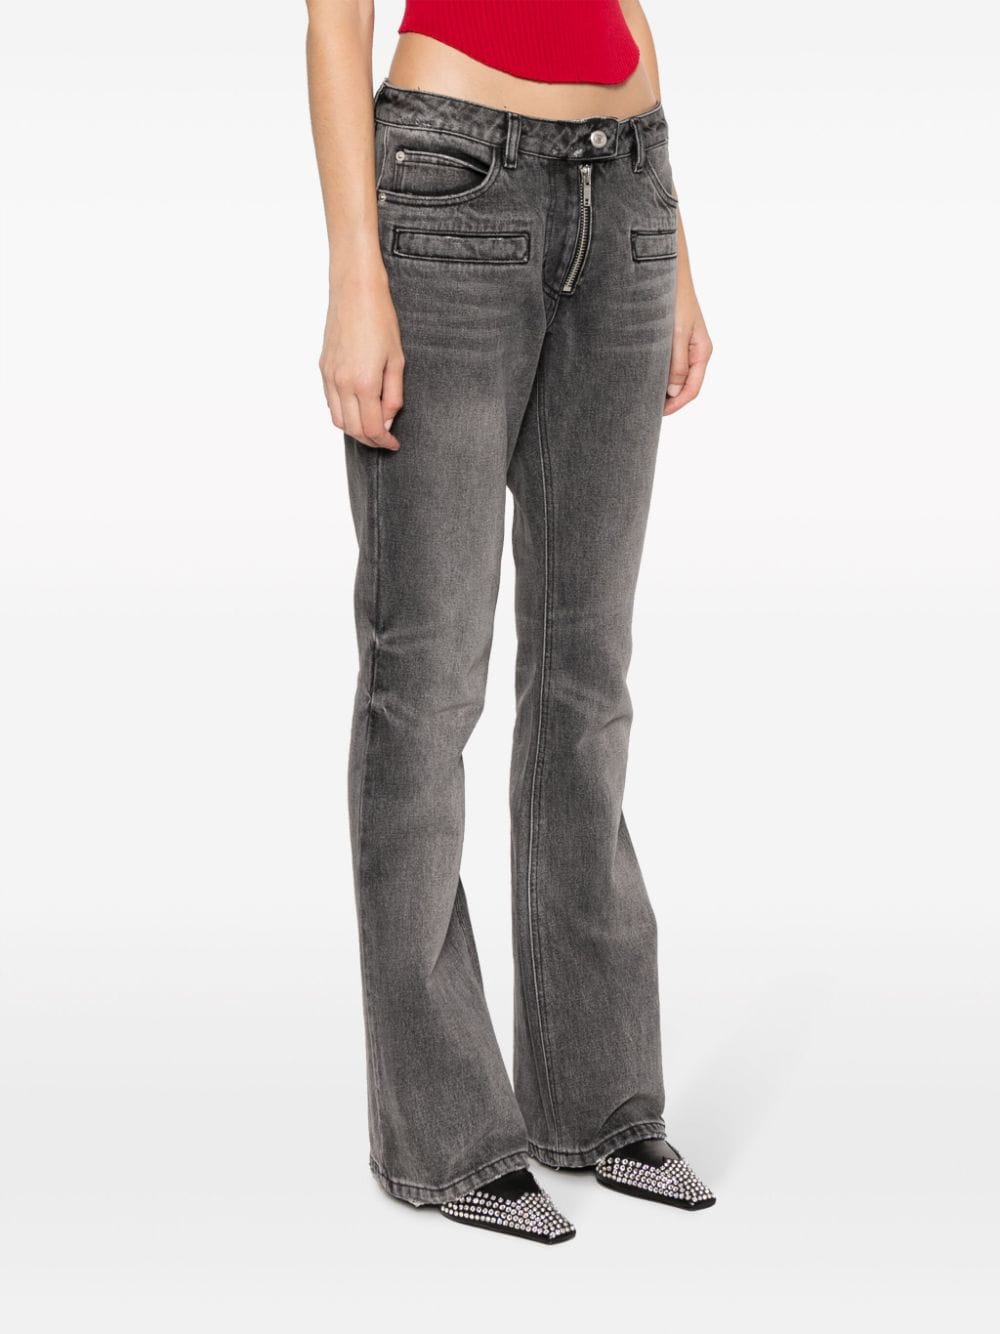 COURREGÈS Stonewashed Gray Denim Jeans for Women